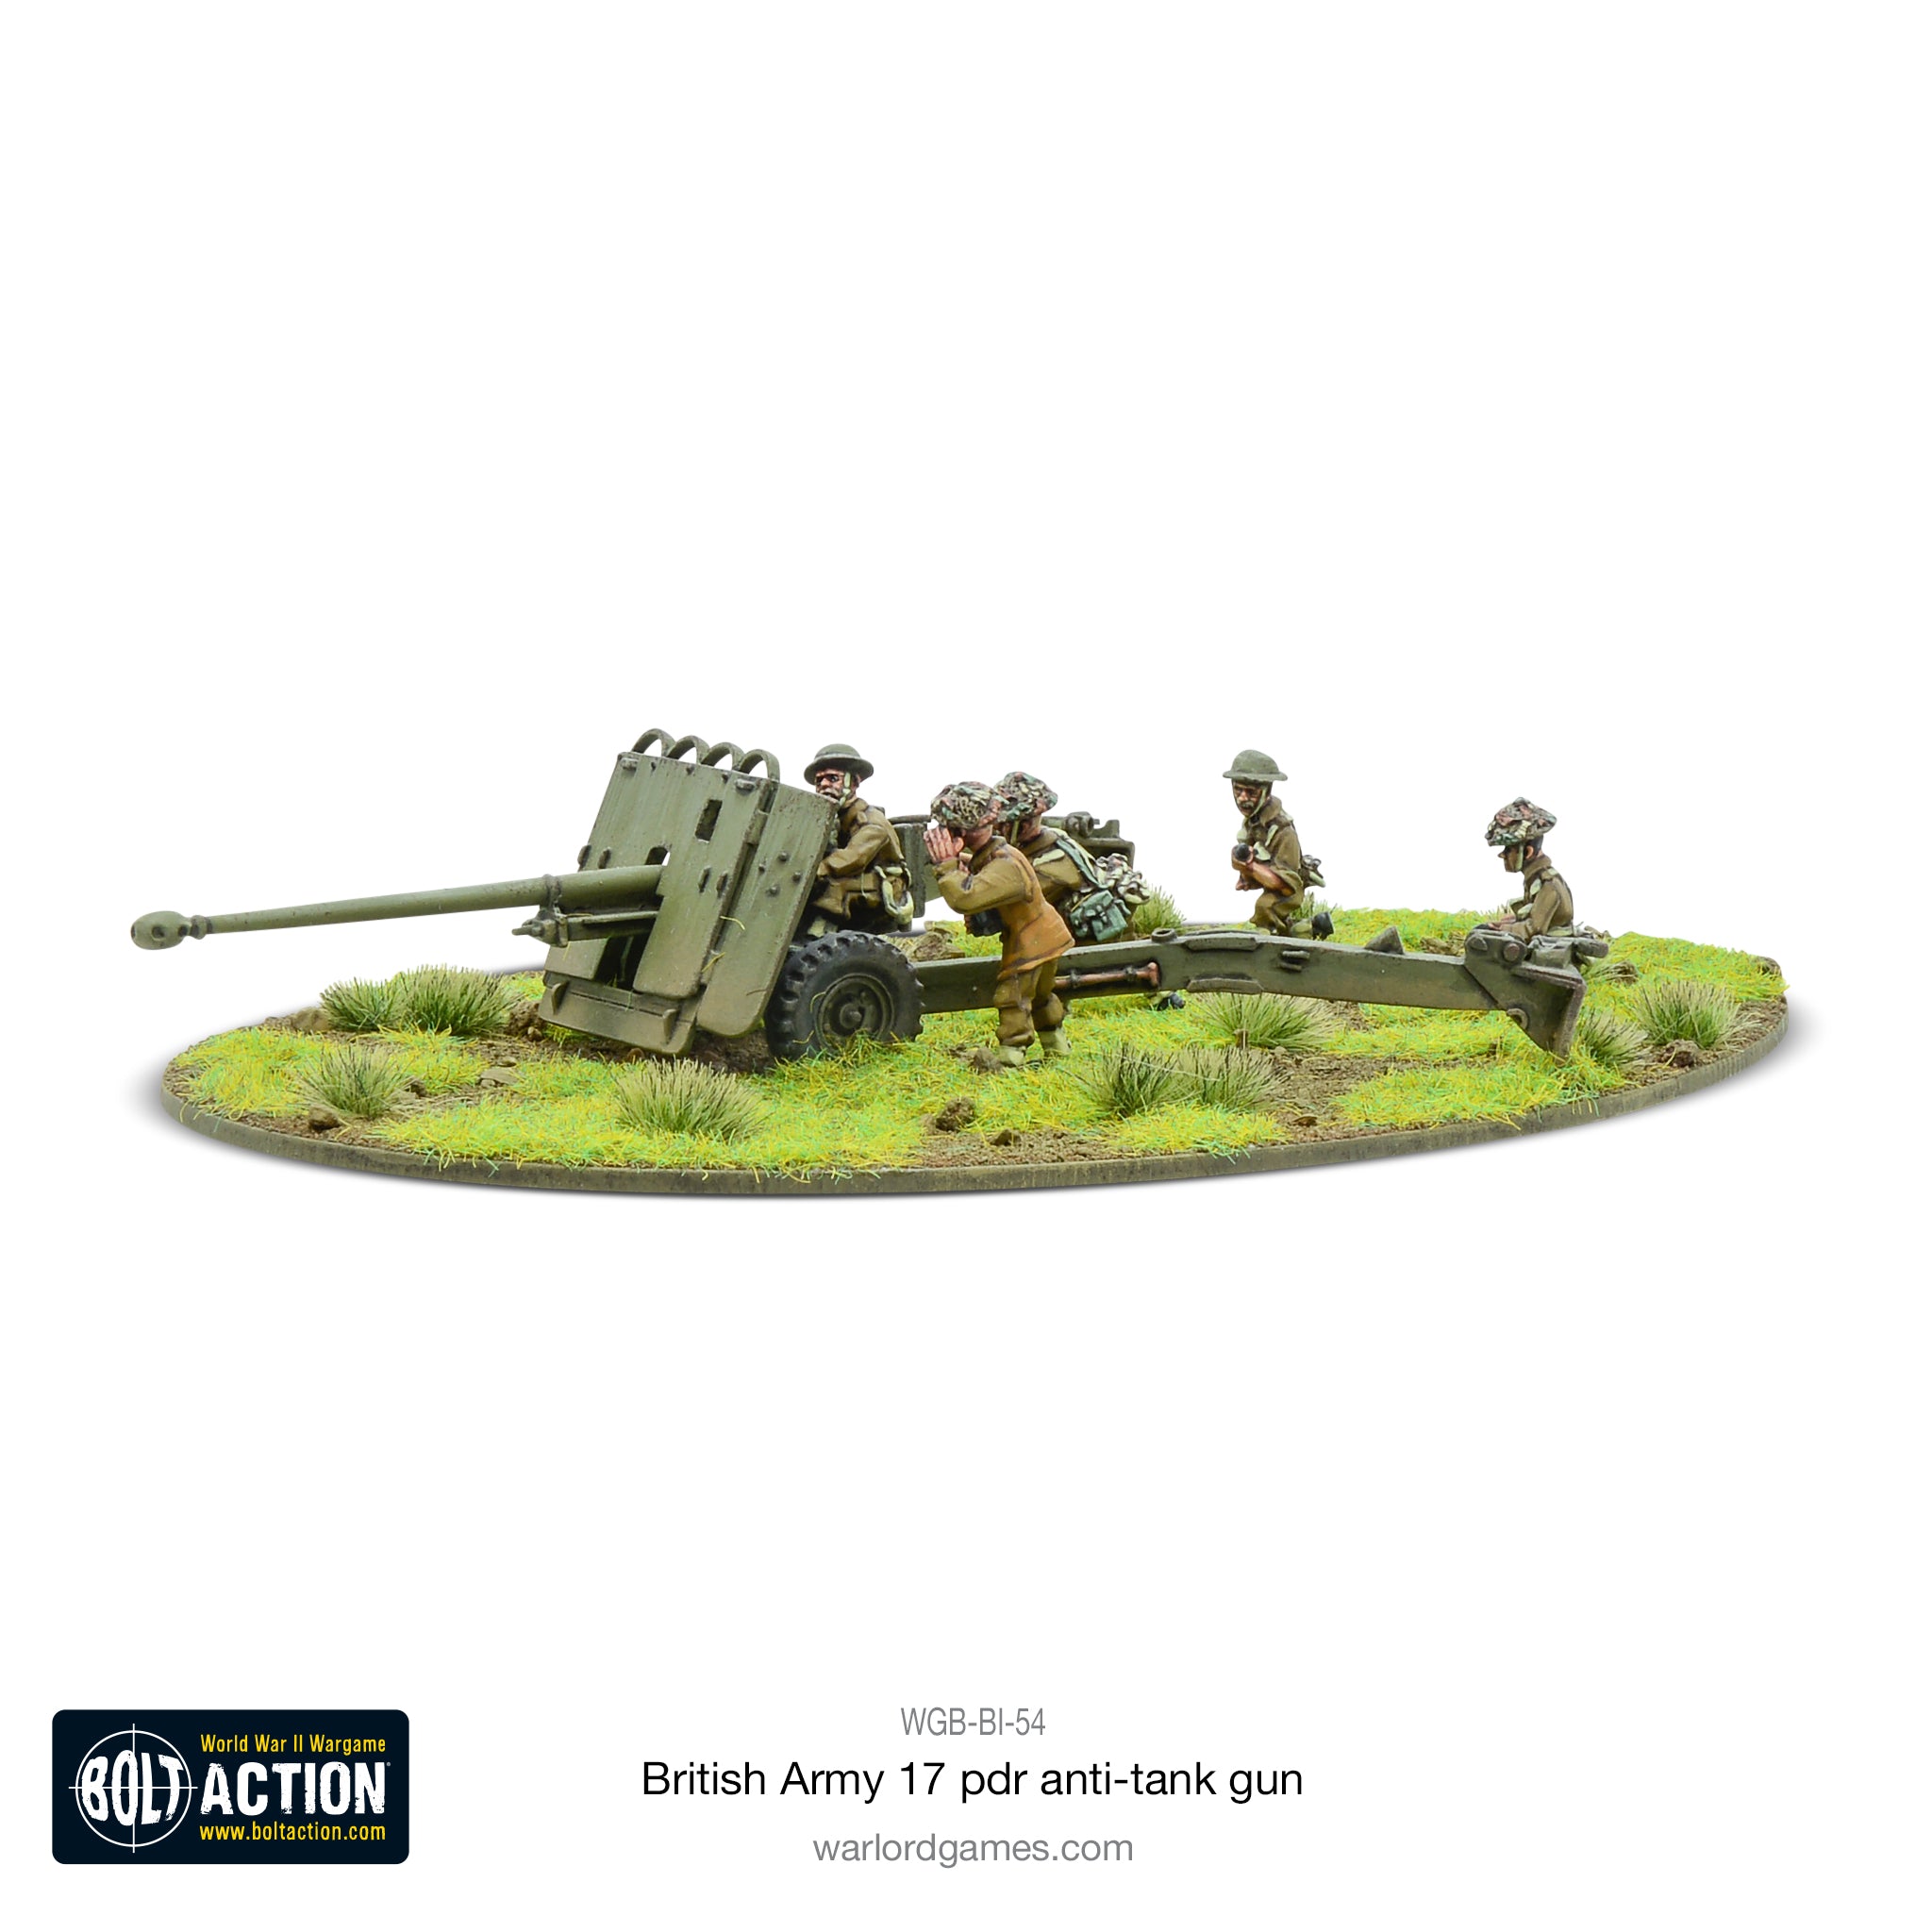 British Army 17 pdr anti-tank gun